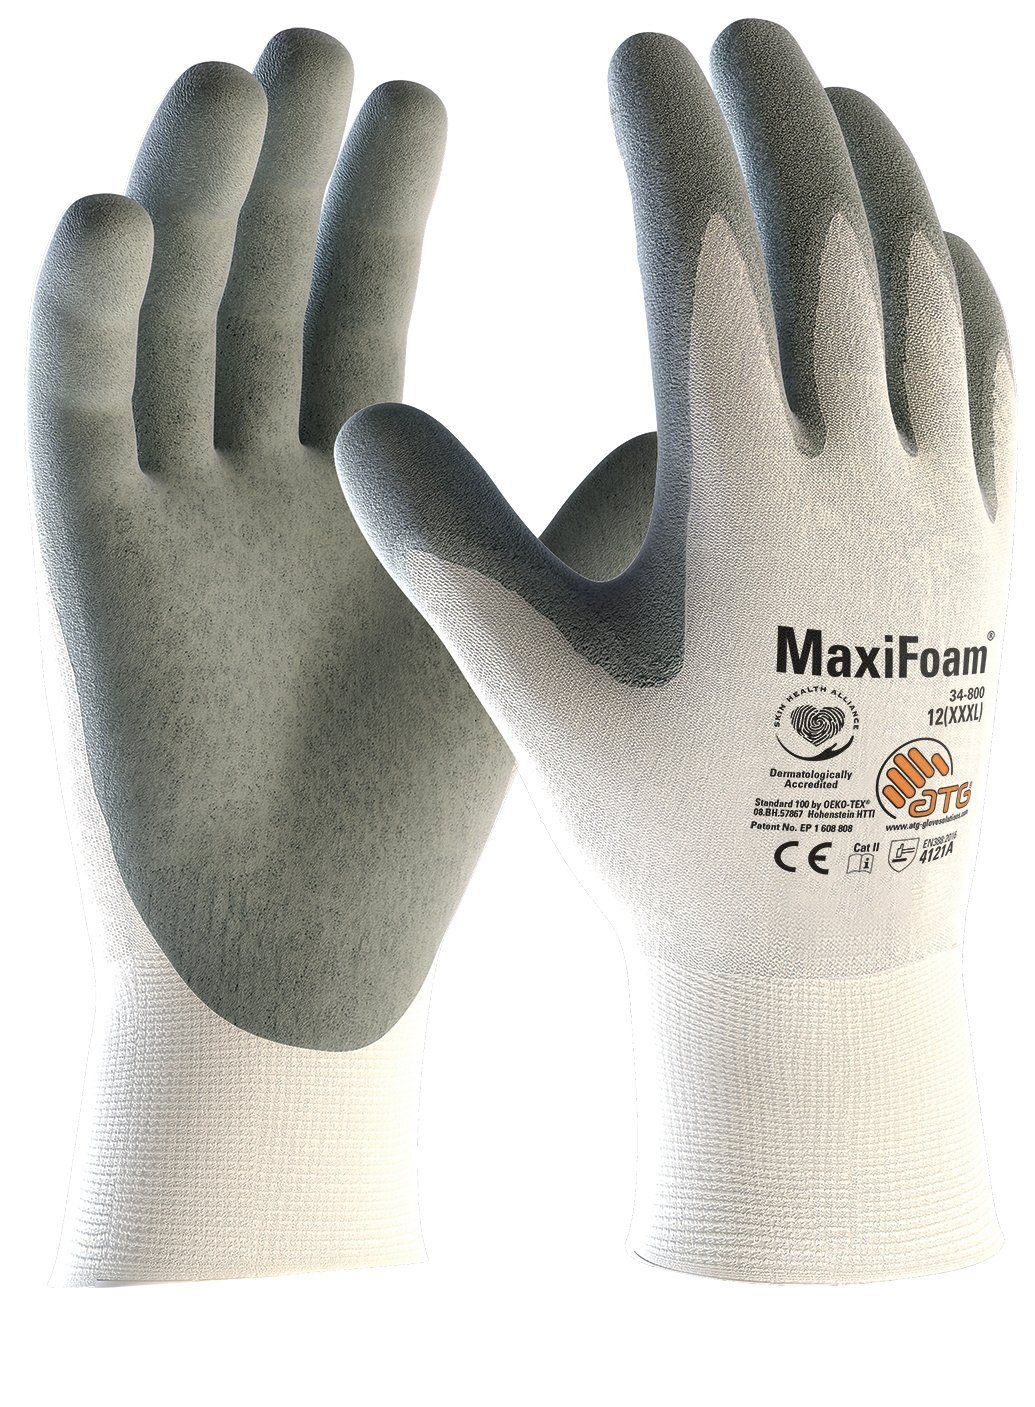 ATG Nitril-Handschuhe Paar 12 (34-800) "MaxiFoam"